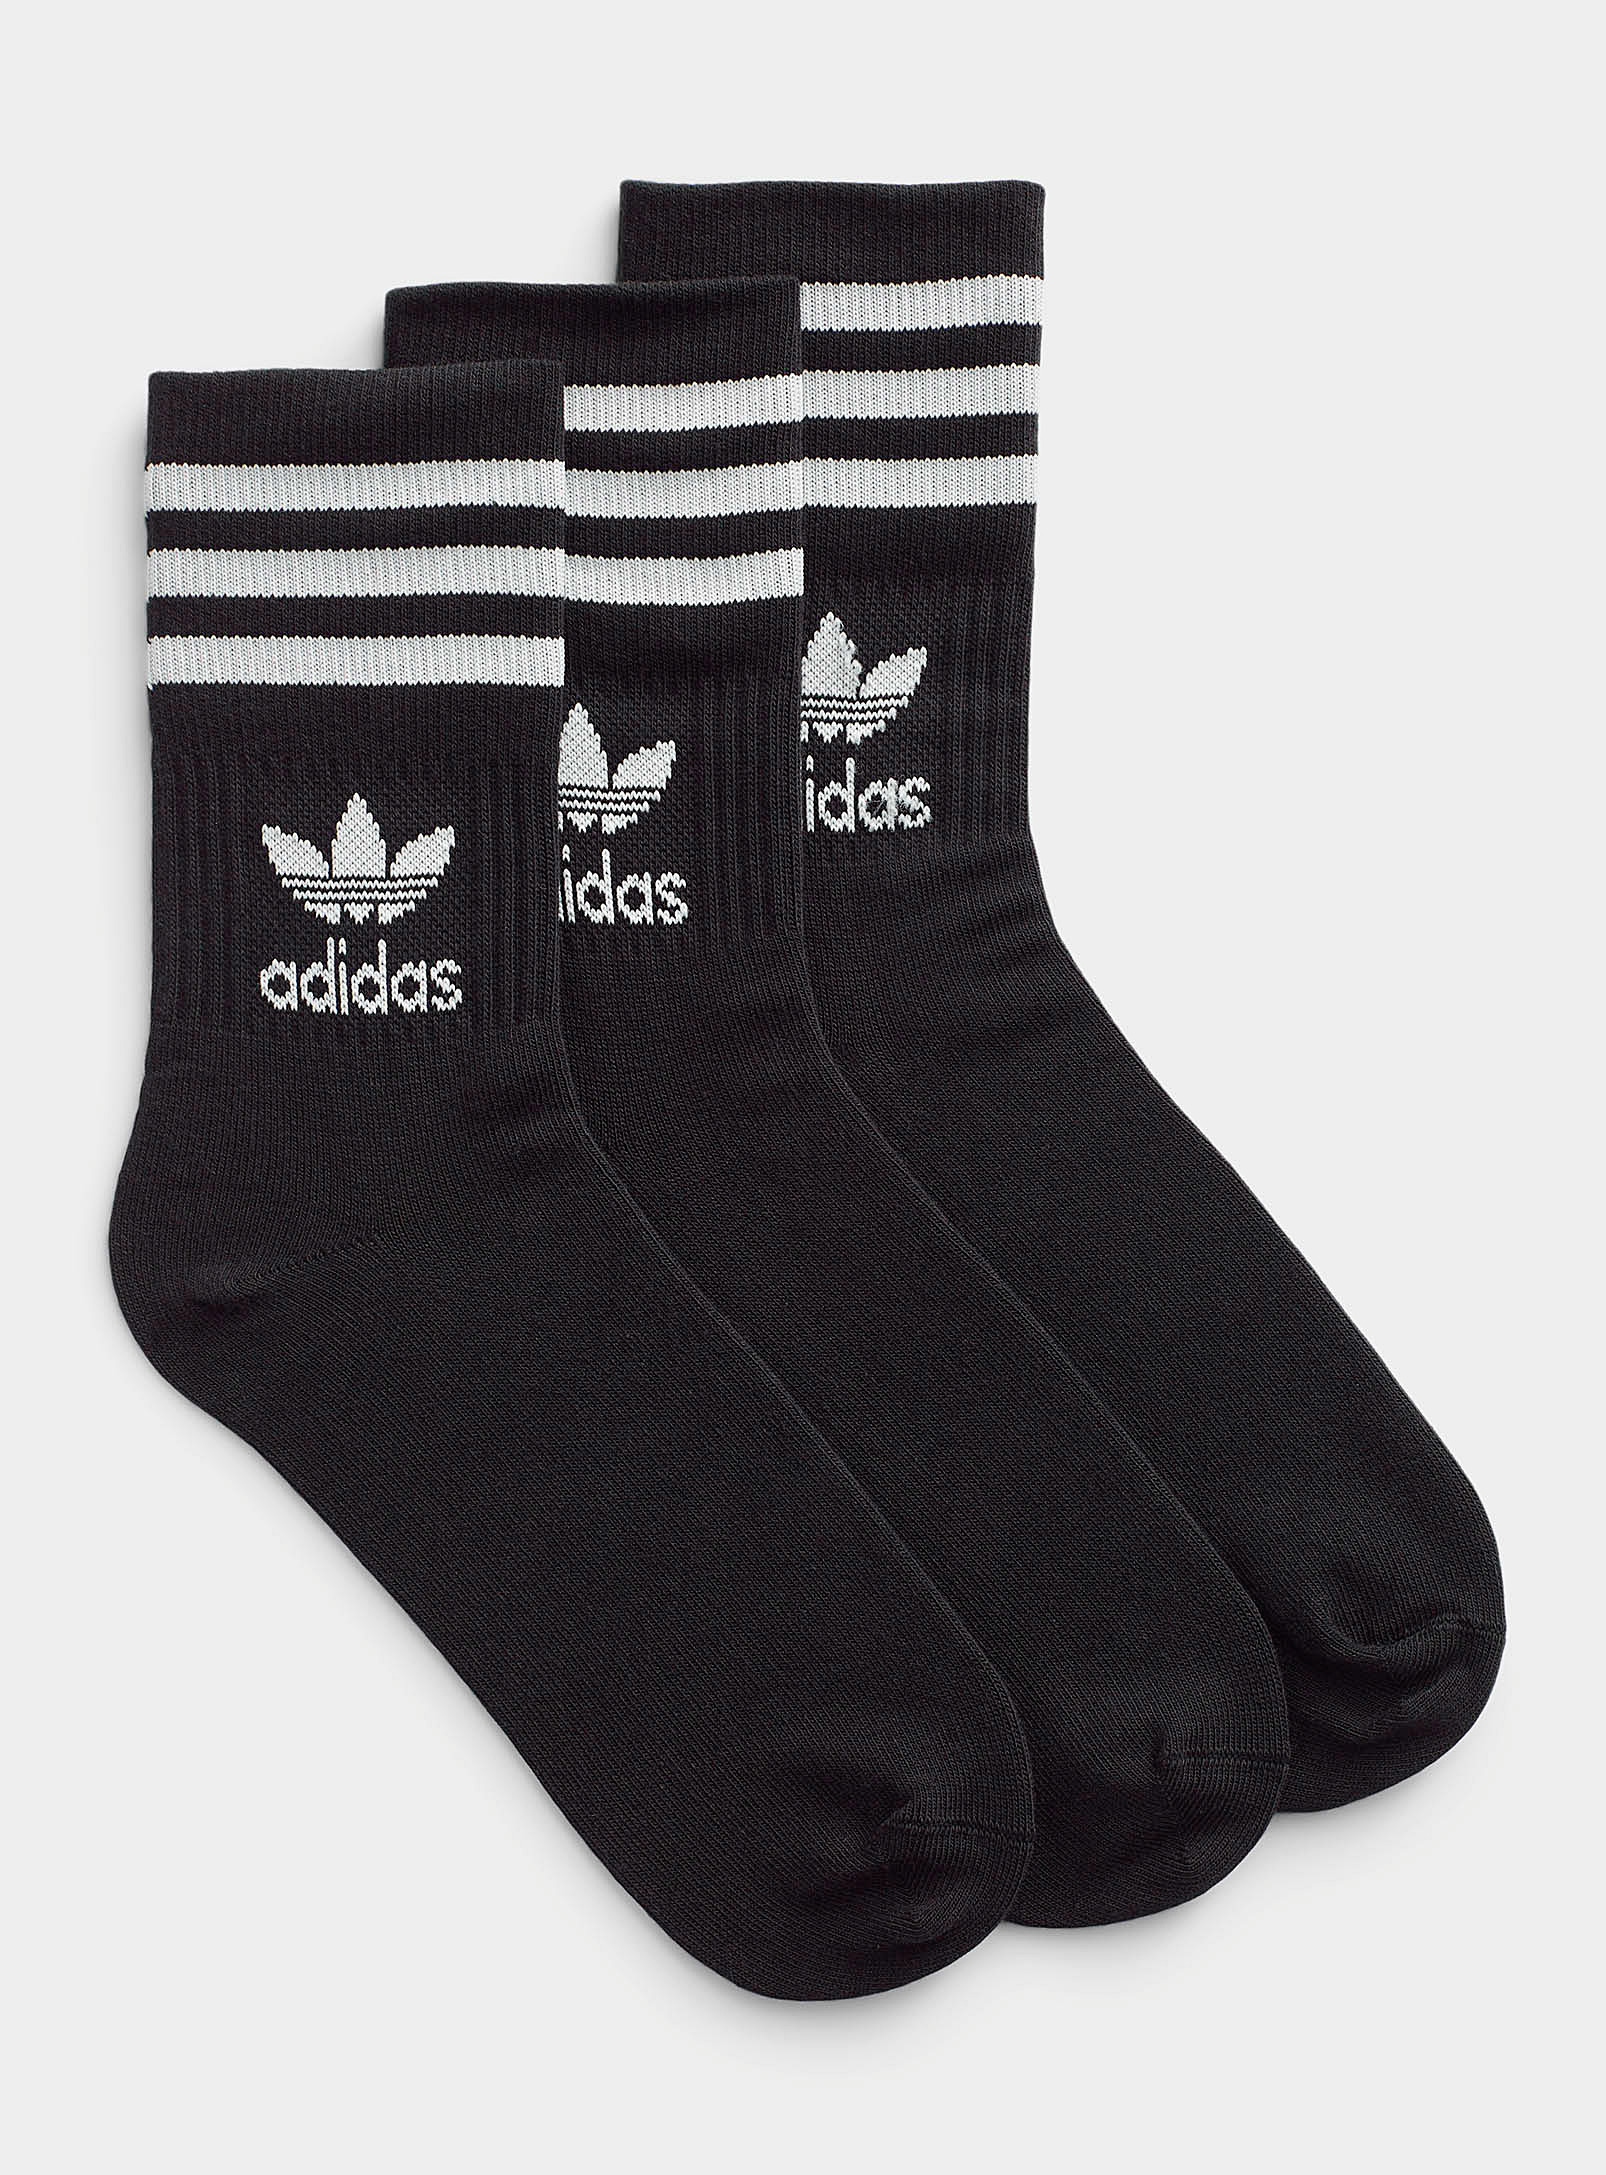 Adidas Originals - Women's Black athletic socks Set of 3